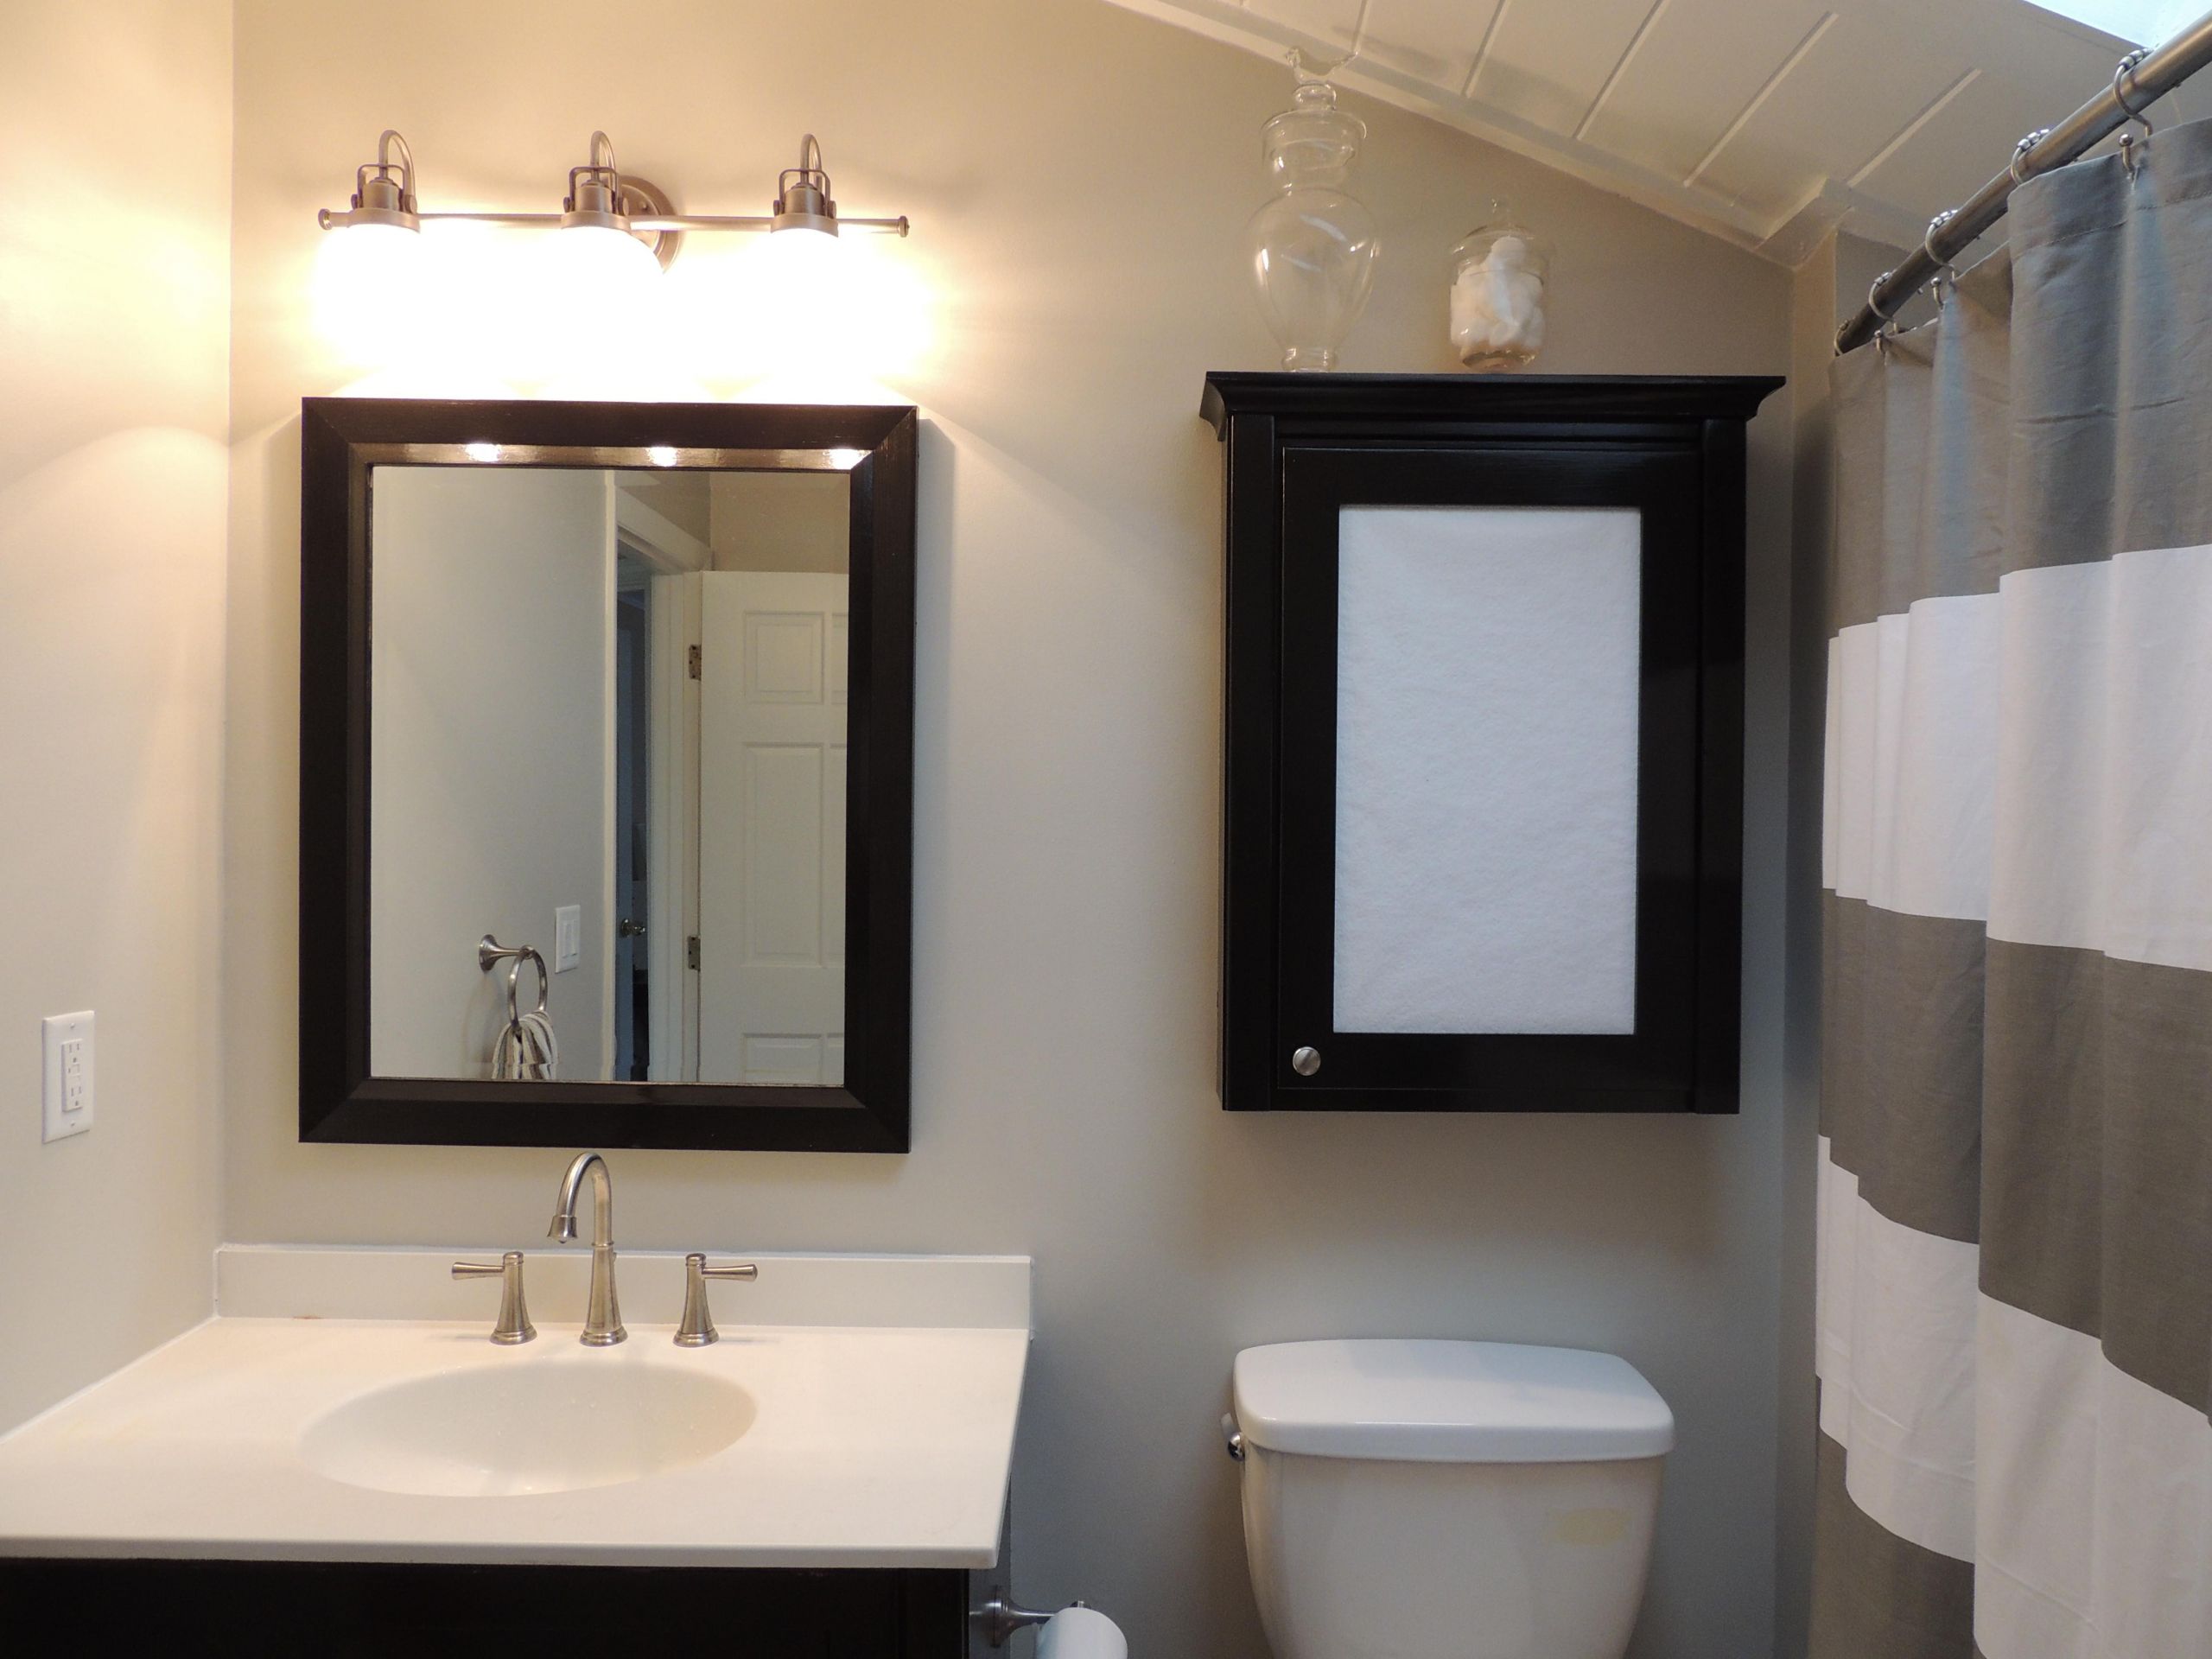 Bathroom Mirror Lowes
 Top 20 Bathroom Lighting and Mirrors